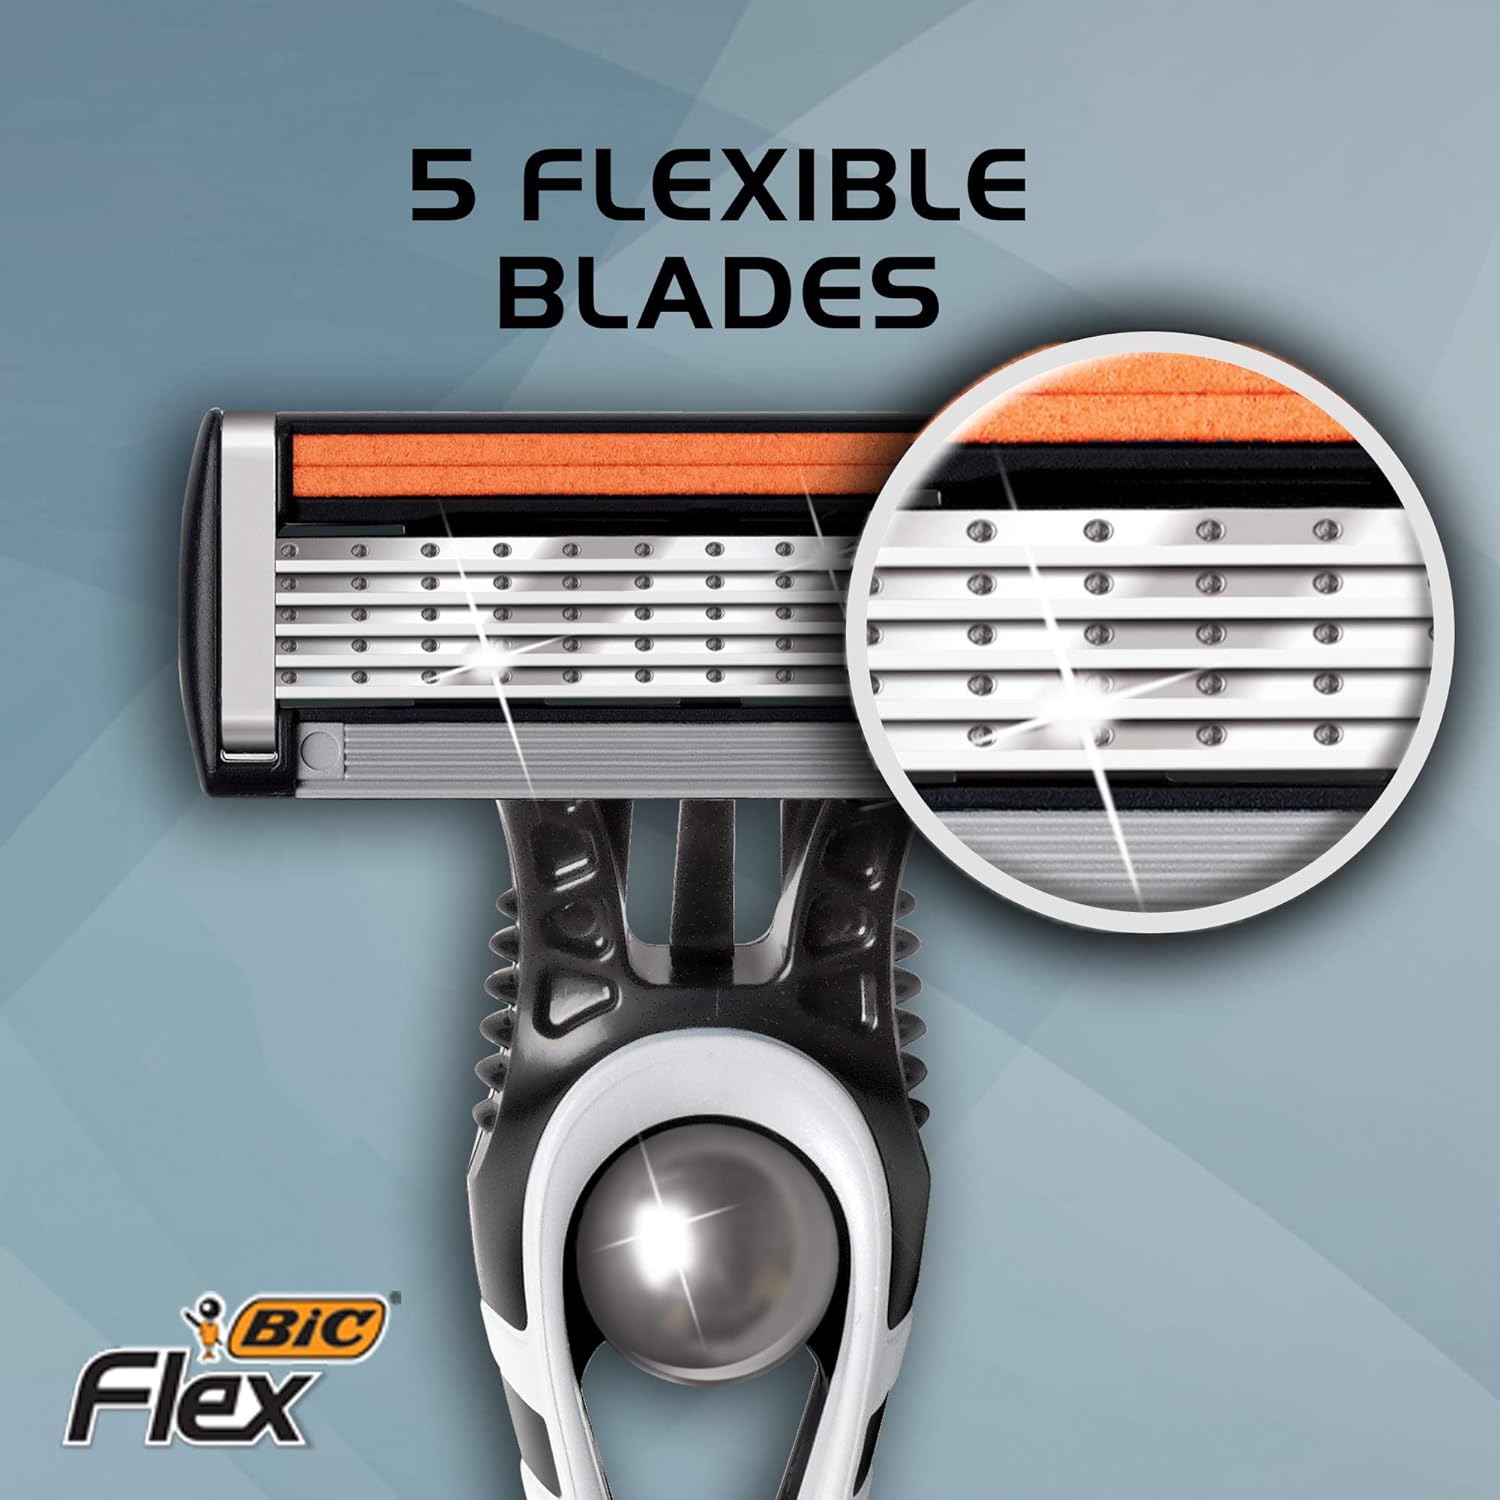 BIC Flex 5 Titanium Men's Disposable Razor, Five Blade, 3 Count, Adjusting Blades for an Ultra-Close Shave : Beauty & Personal Care